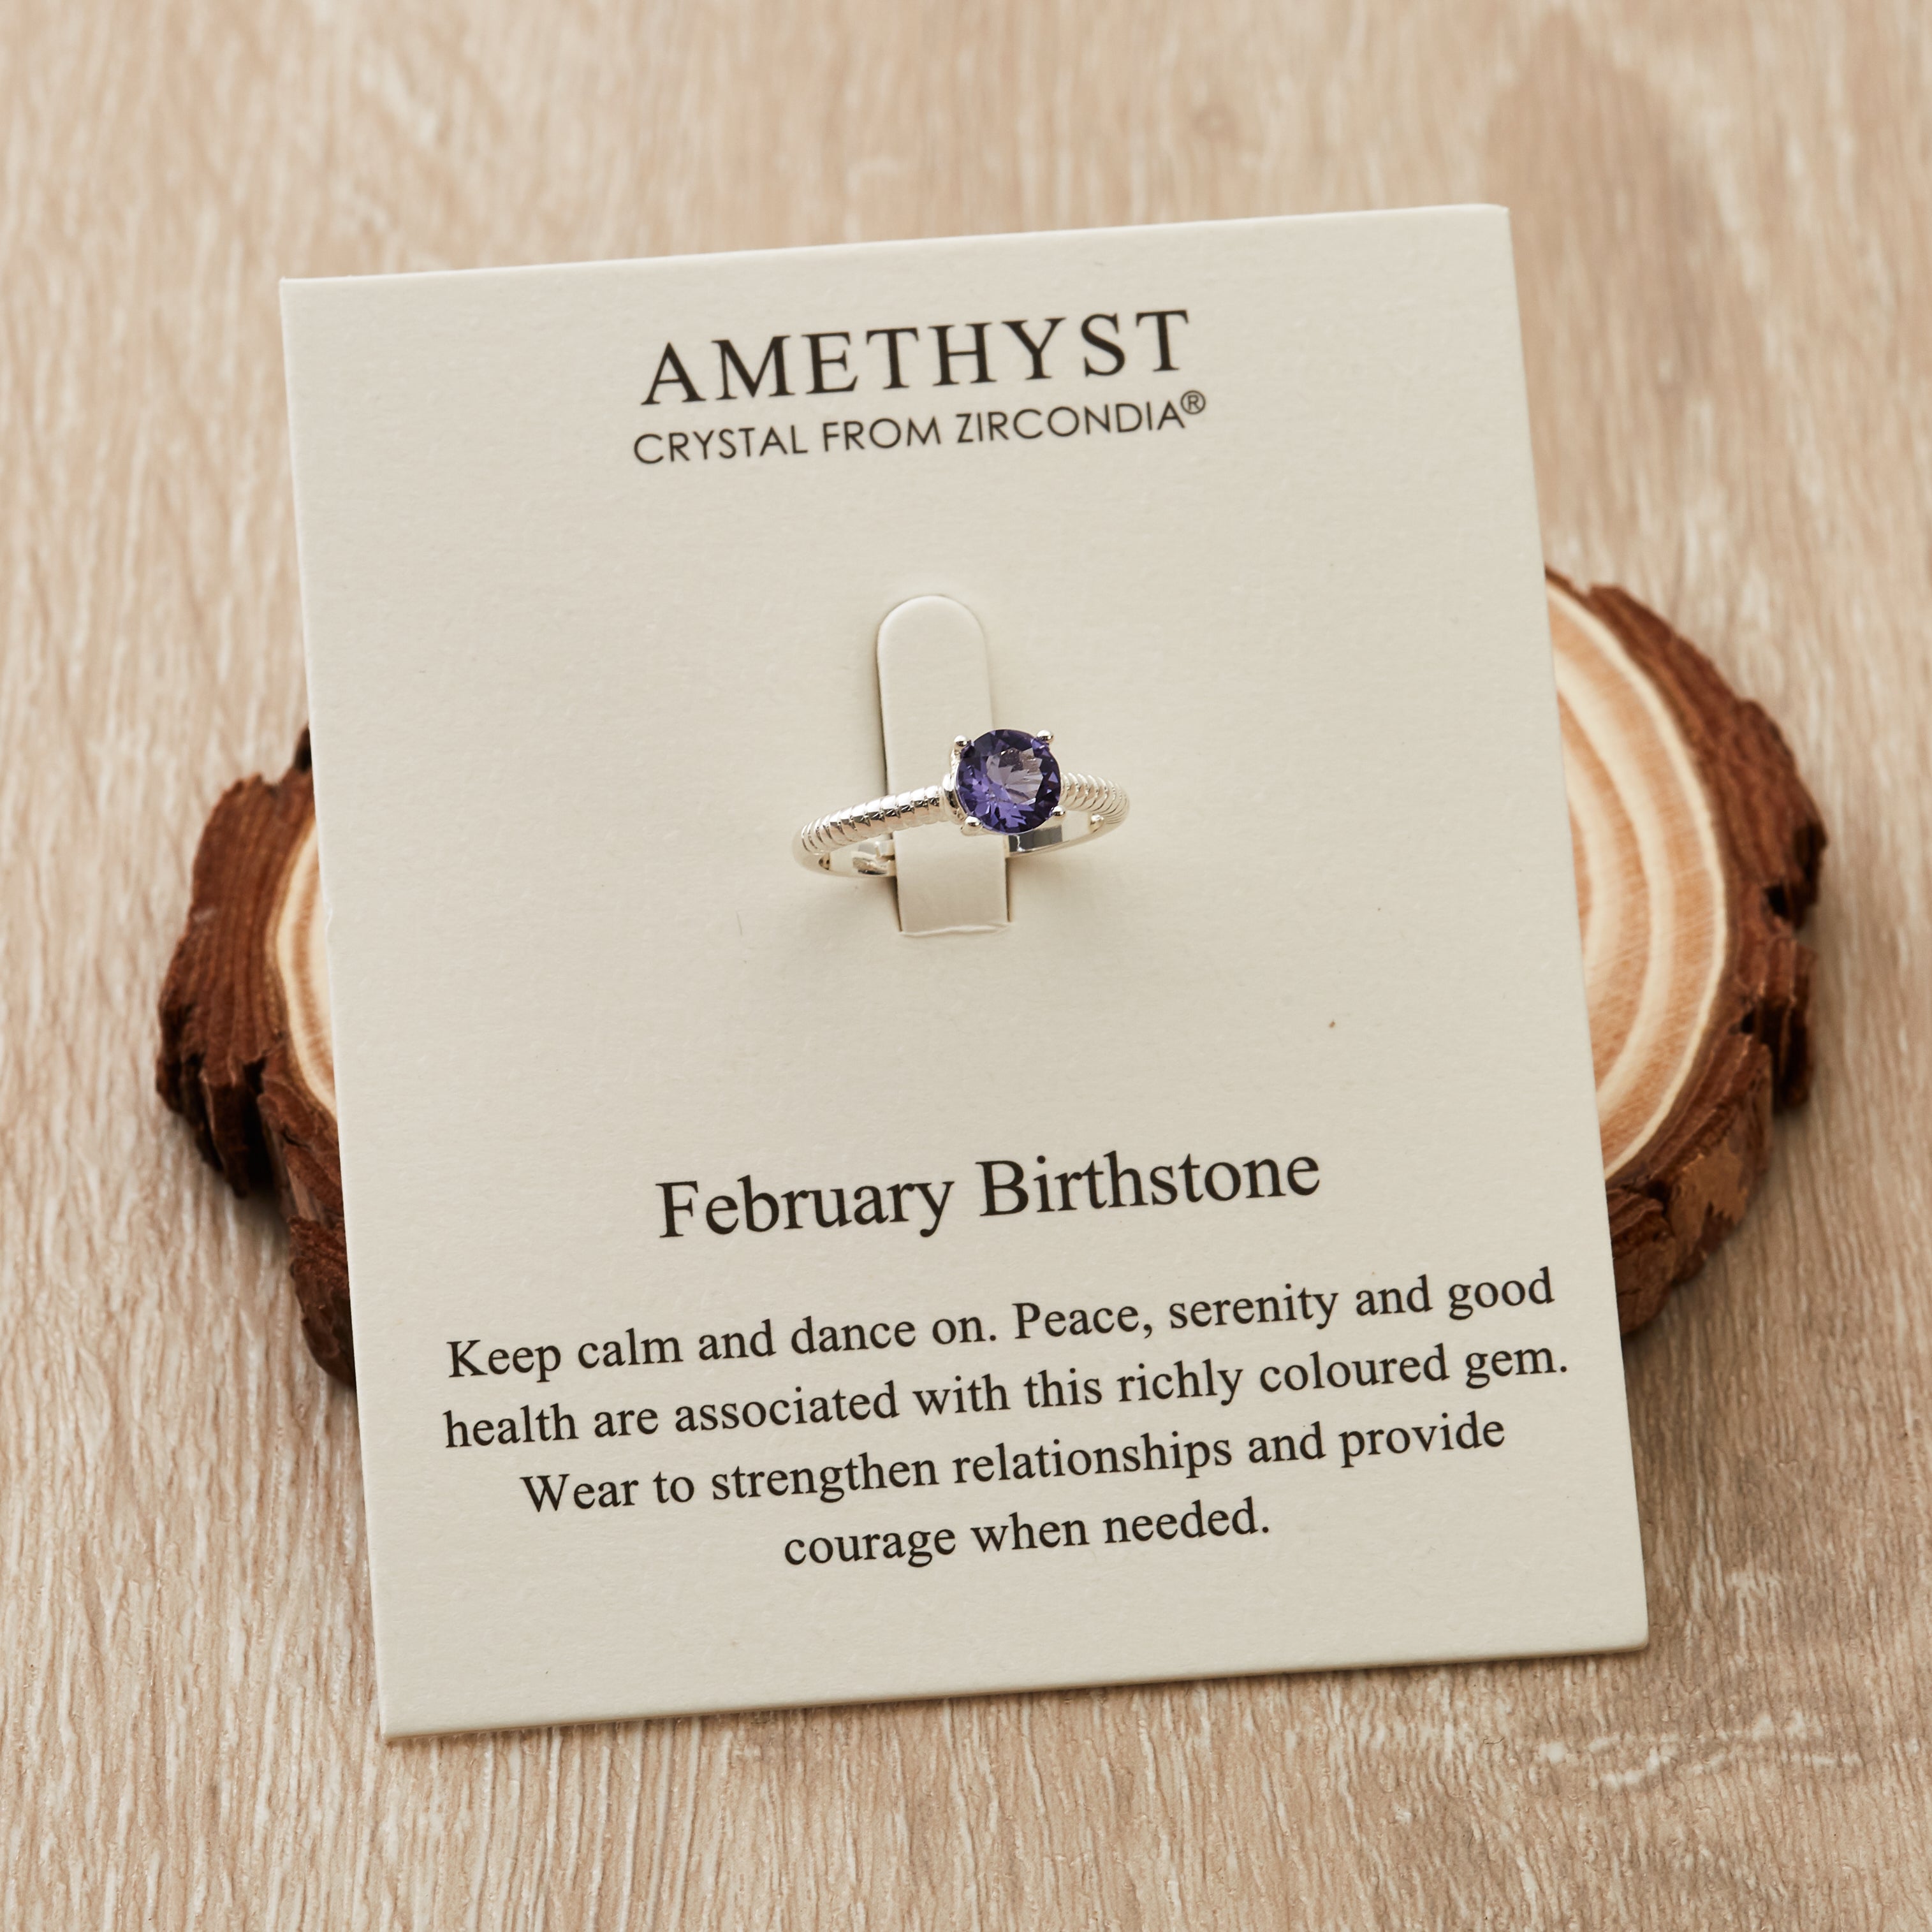 February (Amethyst) Adjustable Birthstone Ring Created with Zircondia® Crystals